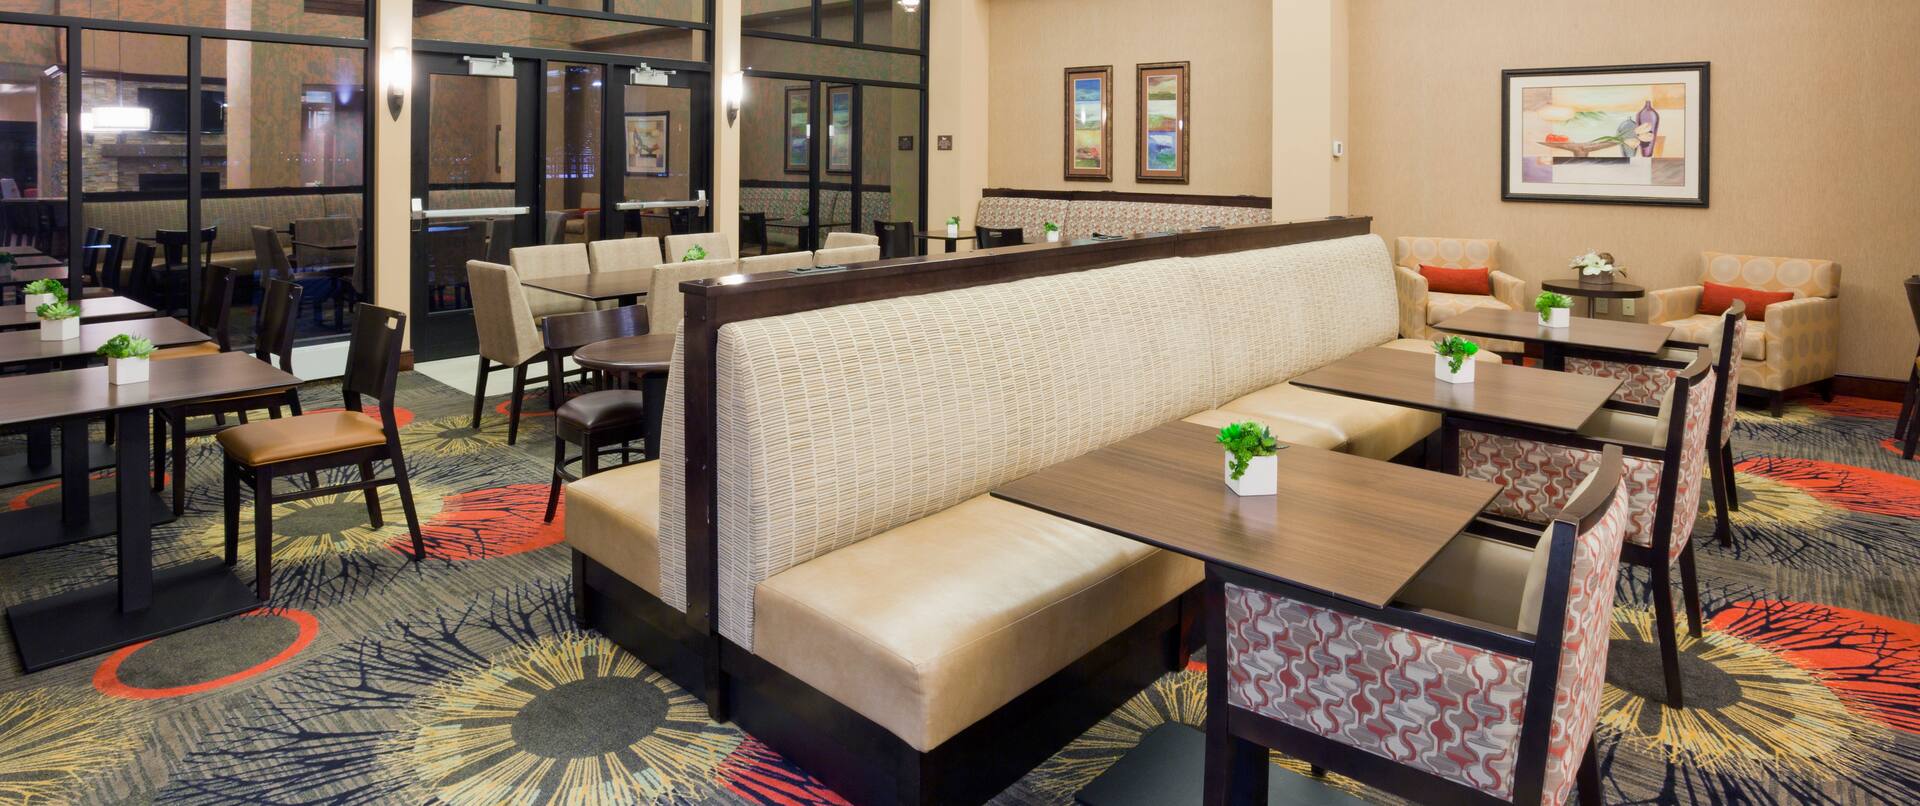 Homewood Suites by Hilton Minneapolis- St. Louis Park at West End Hotel, MN - Lodge Gathering Area